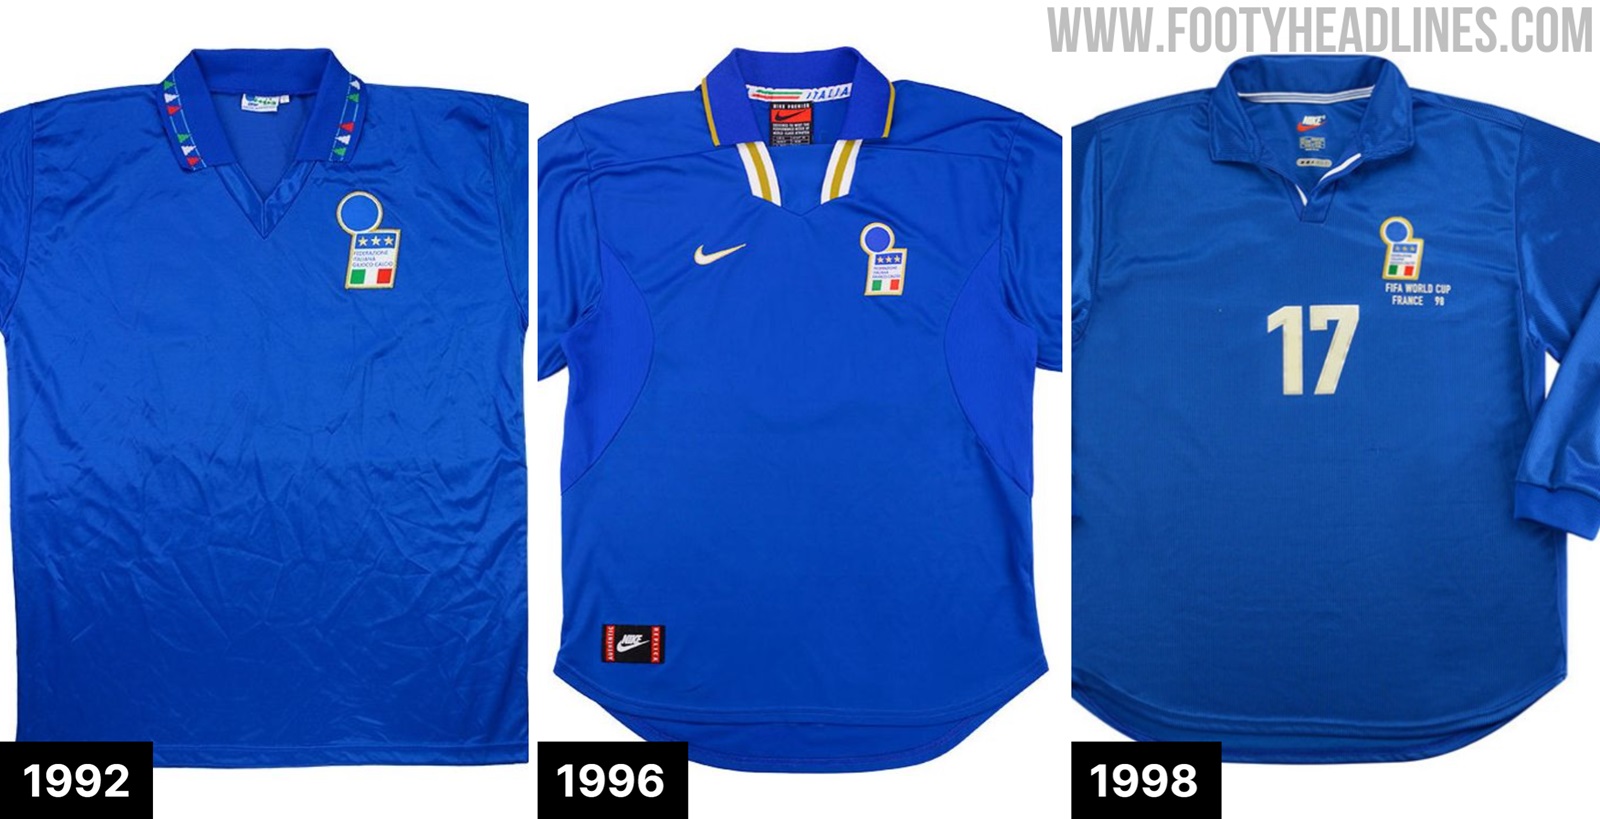 2023-24 Italy adidas Icon Shirt